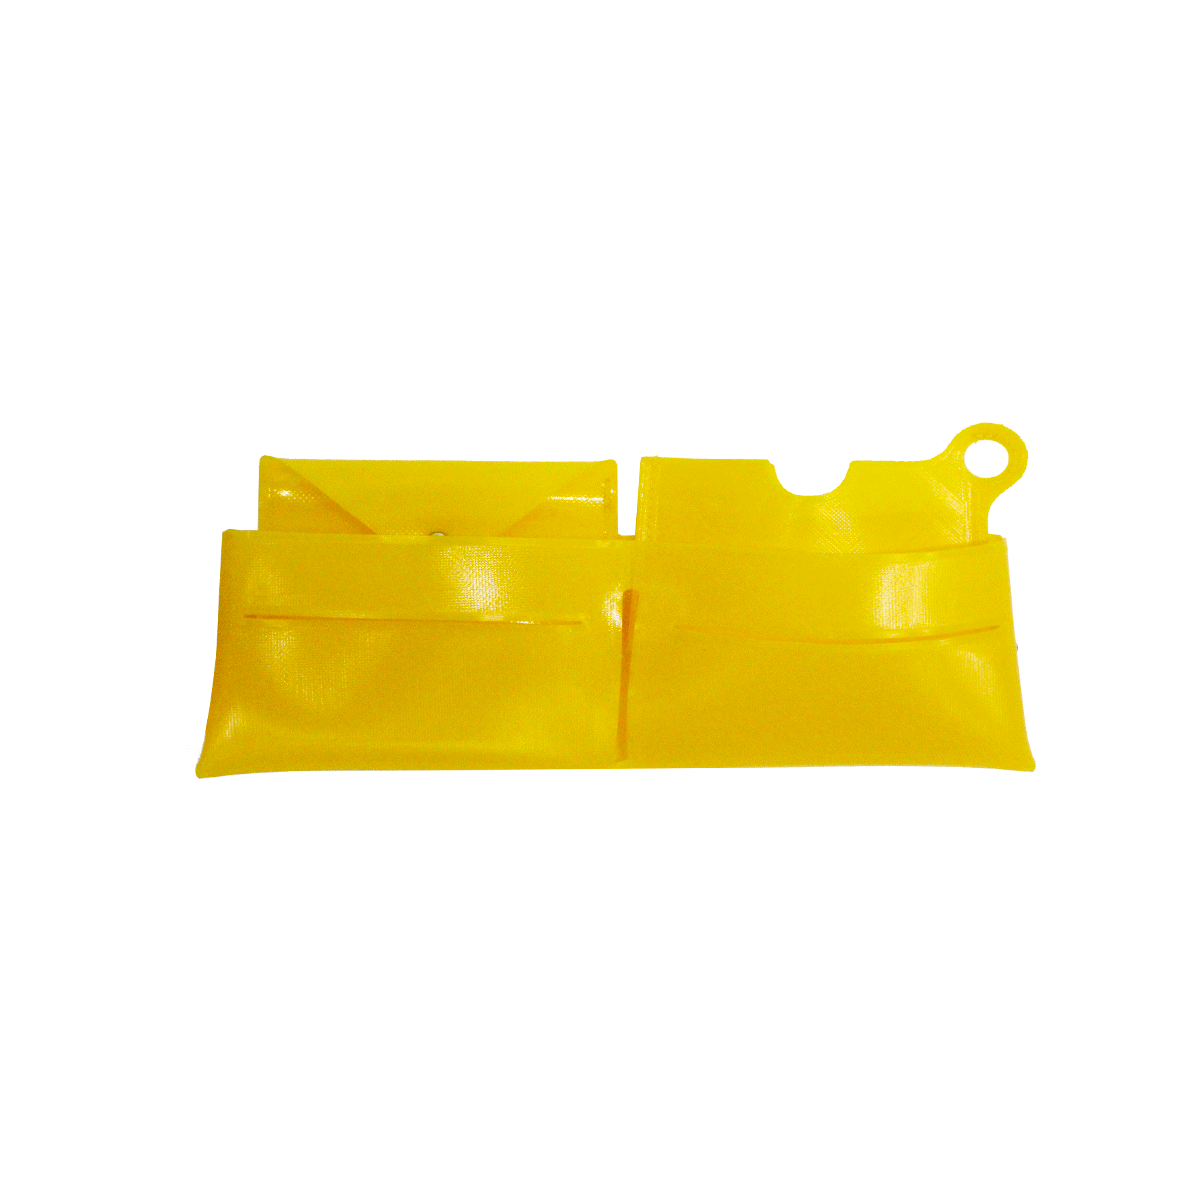 sunny origami wallet - 3 pcs